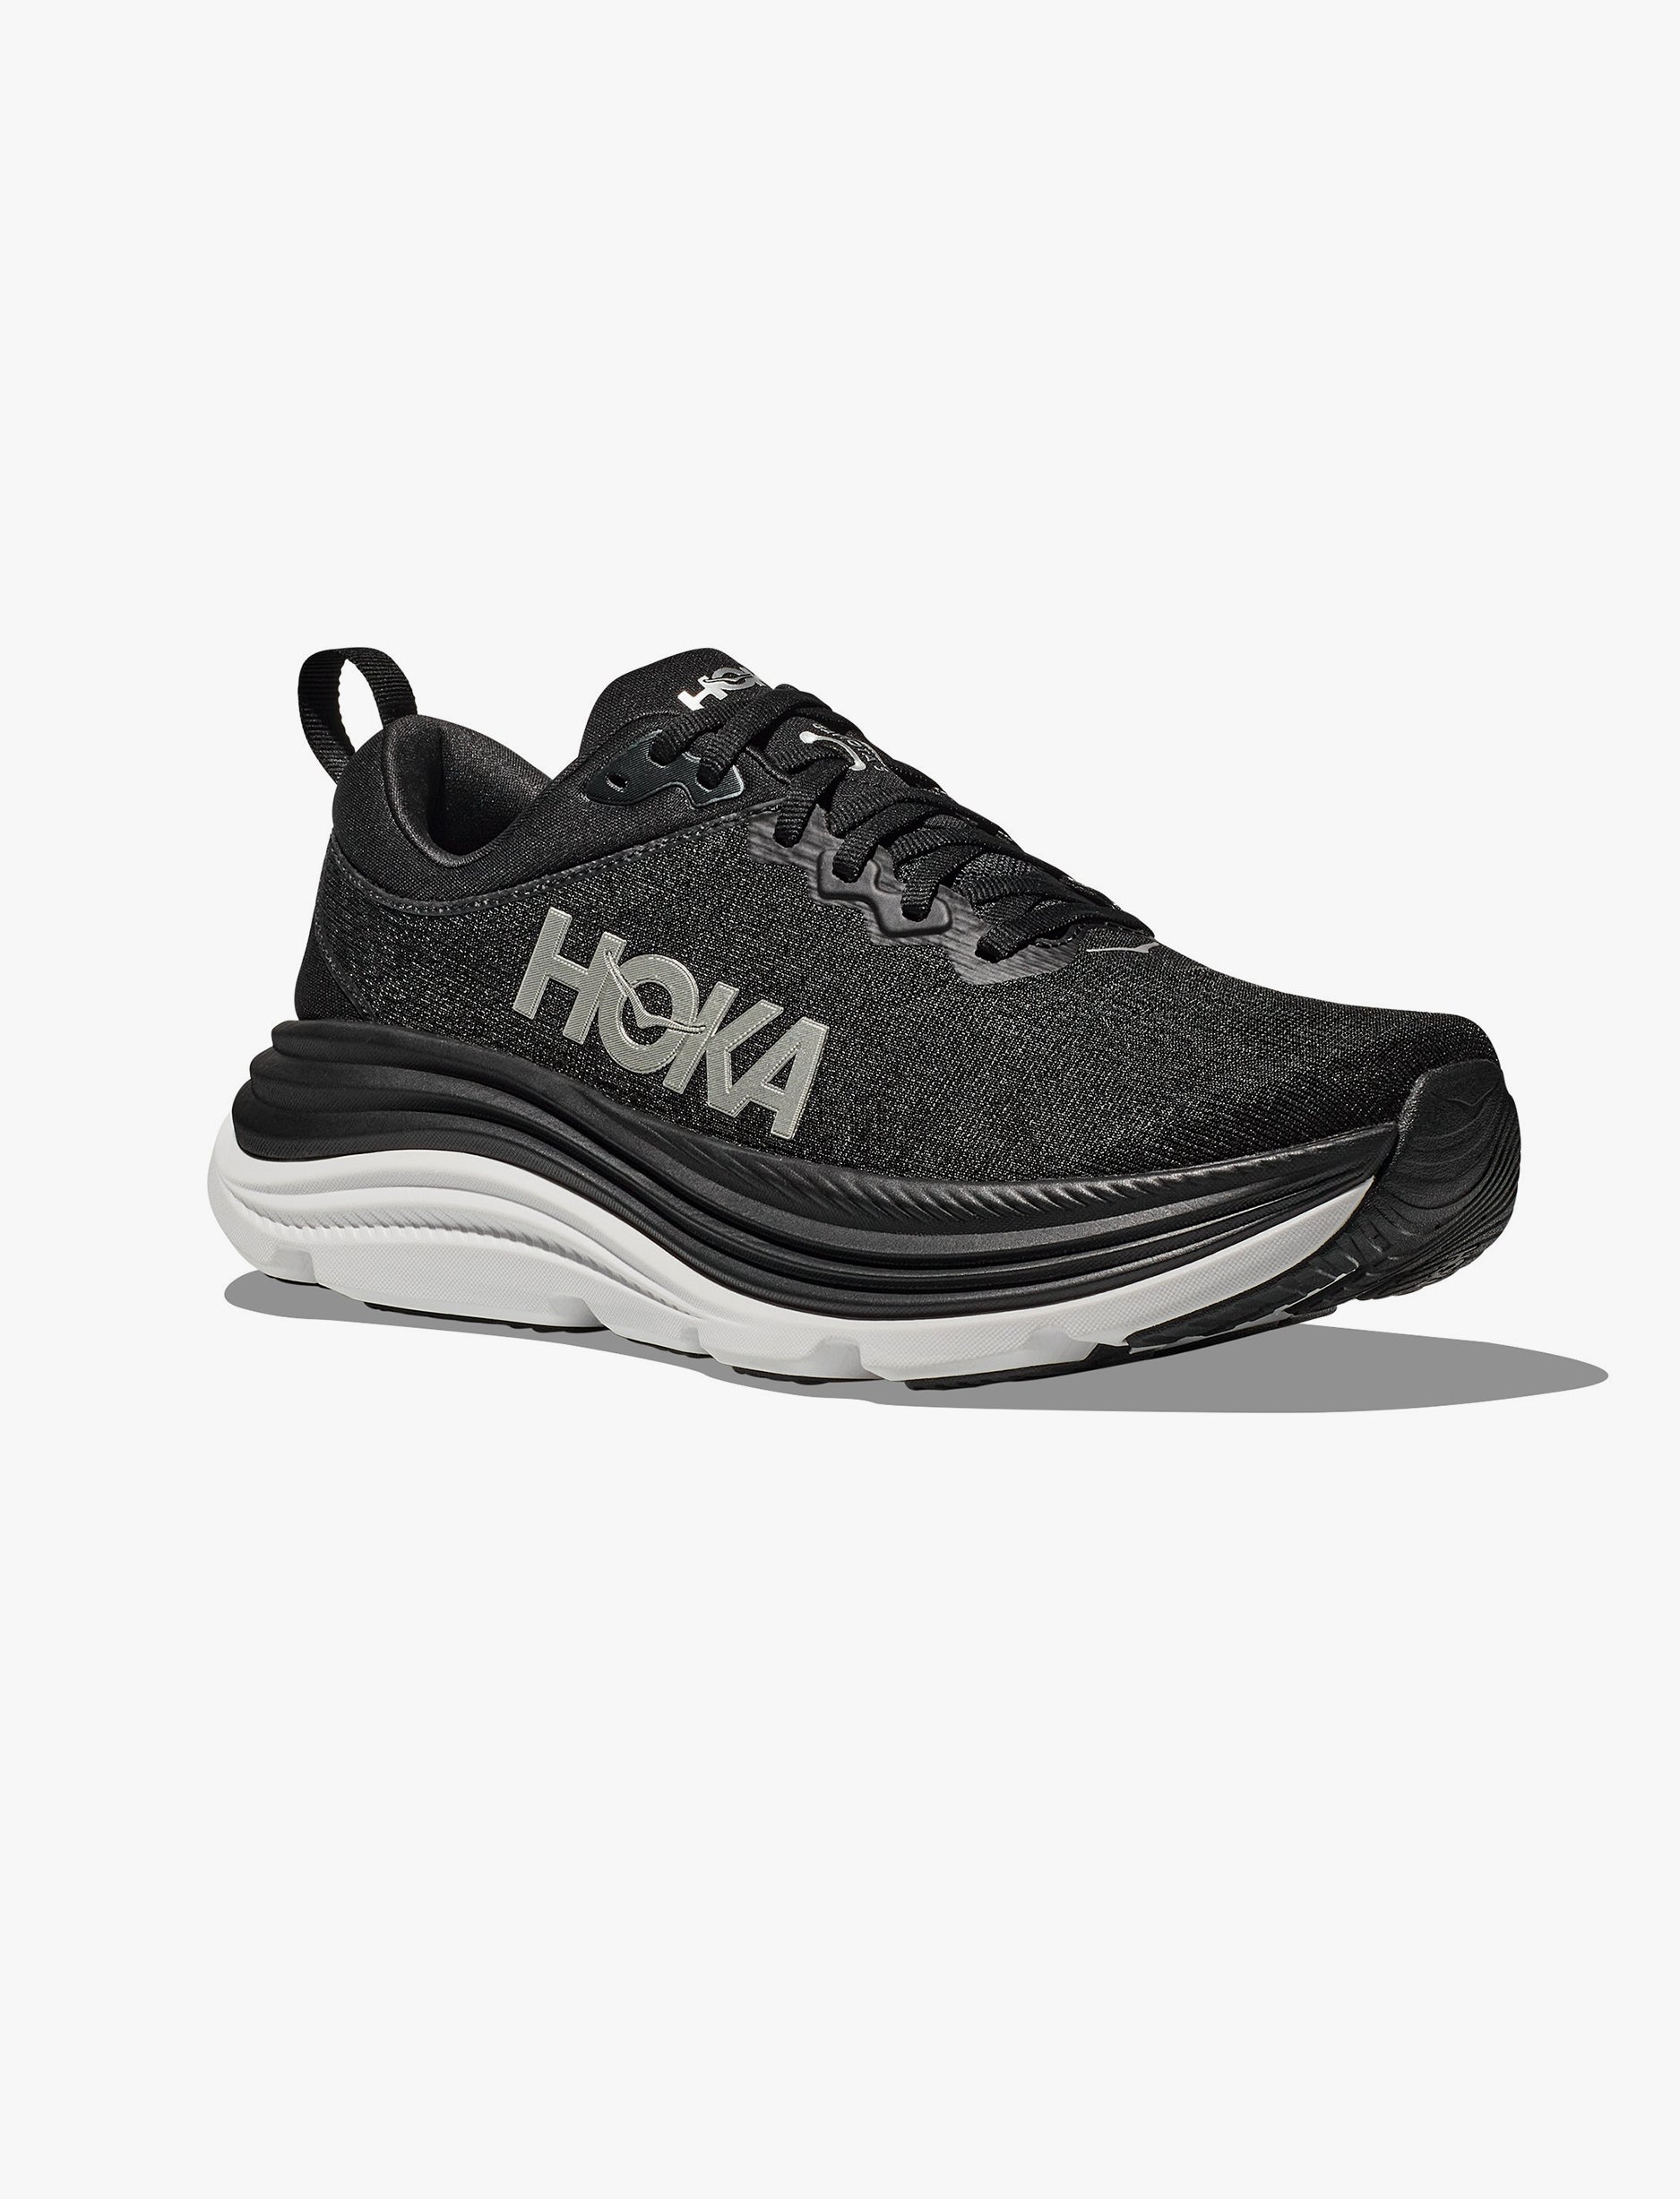 HOKA Gaviota Wide 5 - נעלי ספורט גברים הוקה גביוטה 5 רחבות בצבע שחור/לבן